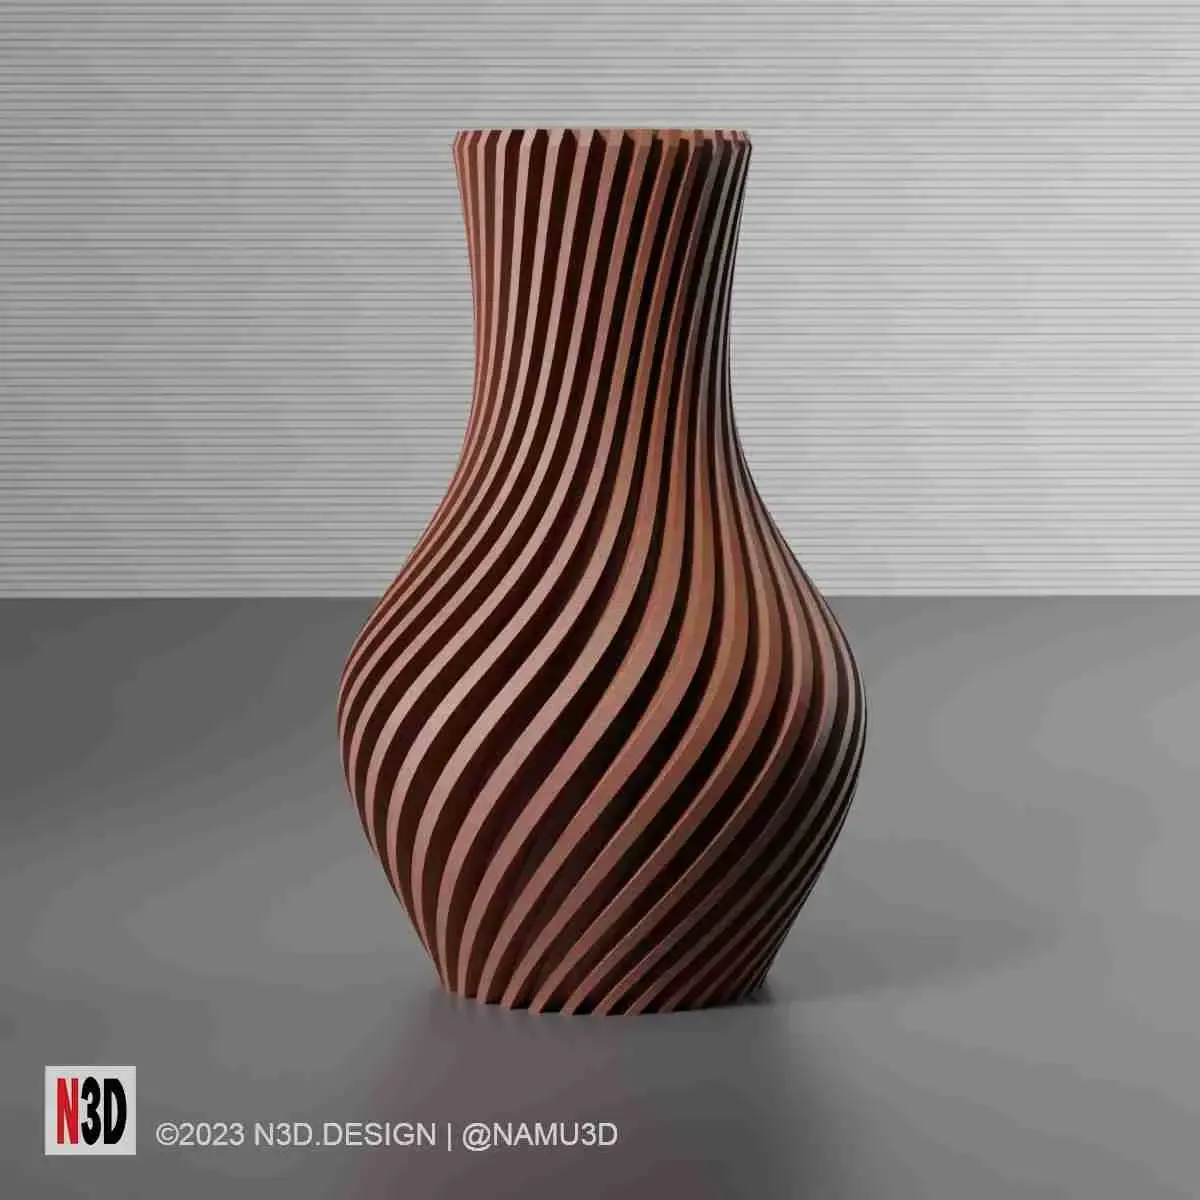 Vase 0034 B - Belly twisted vase